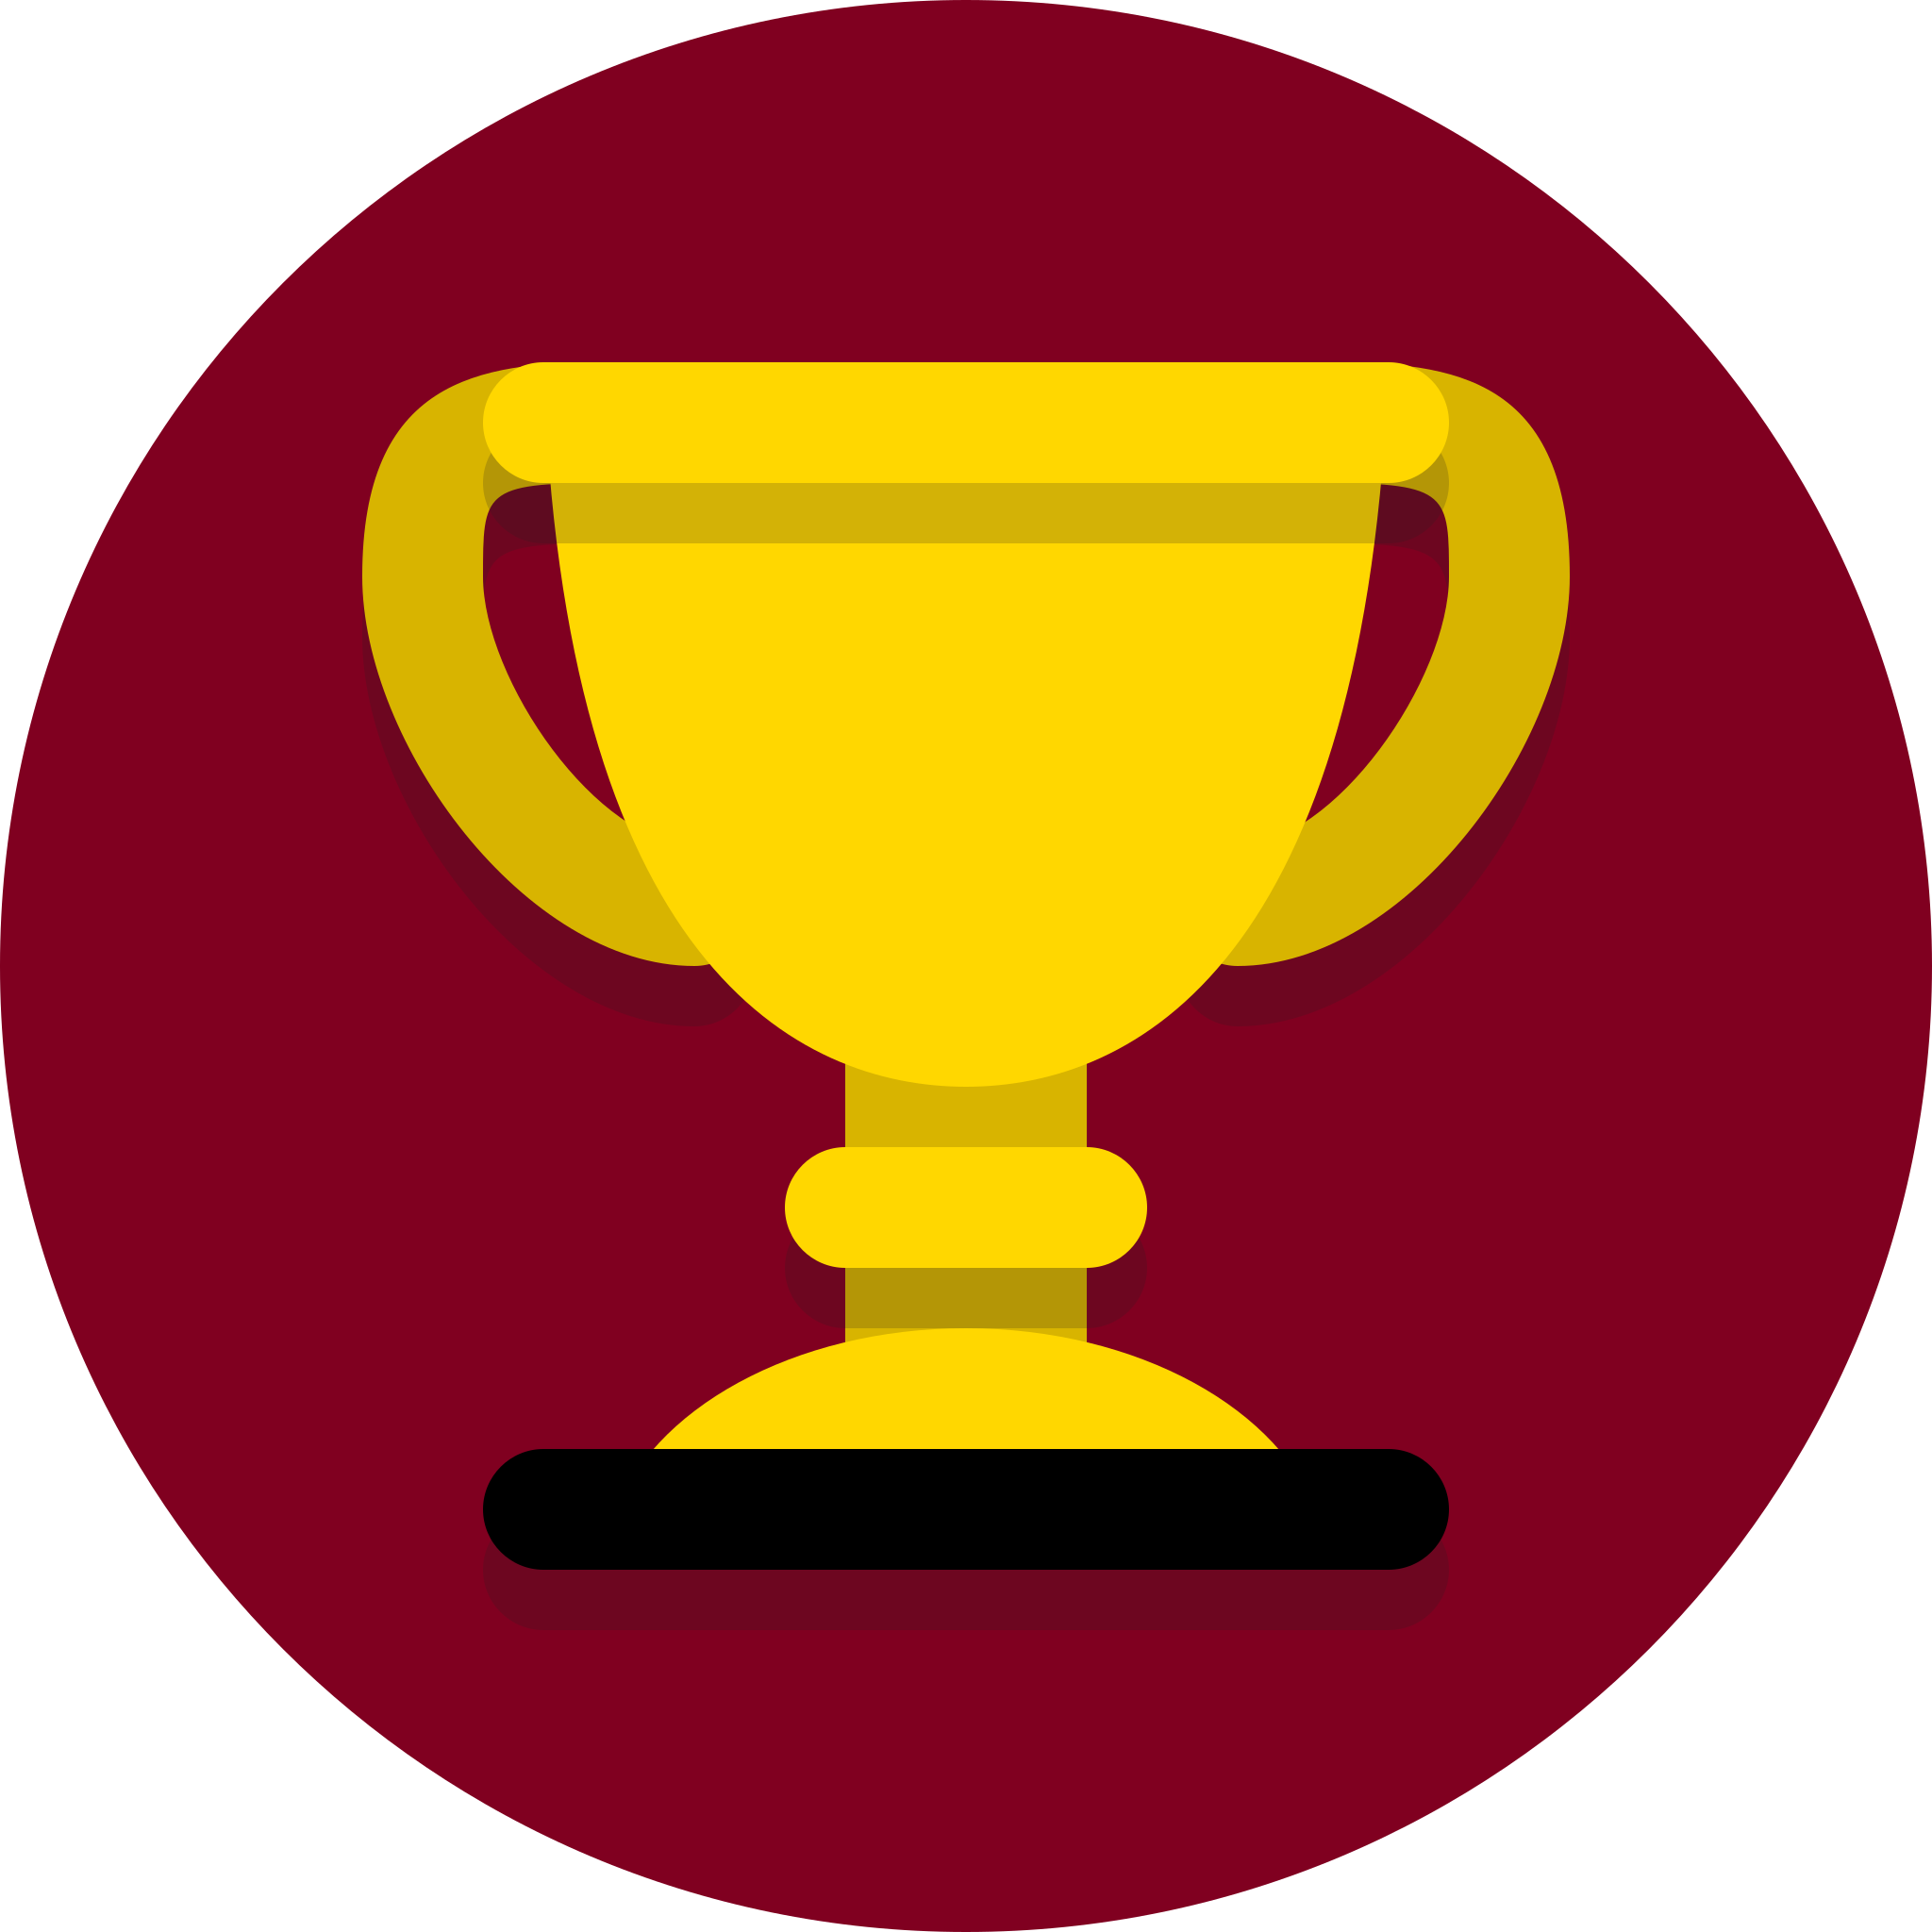 A trophy icon